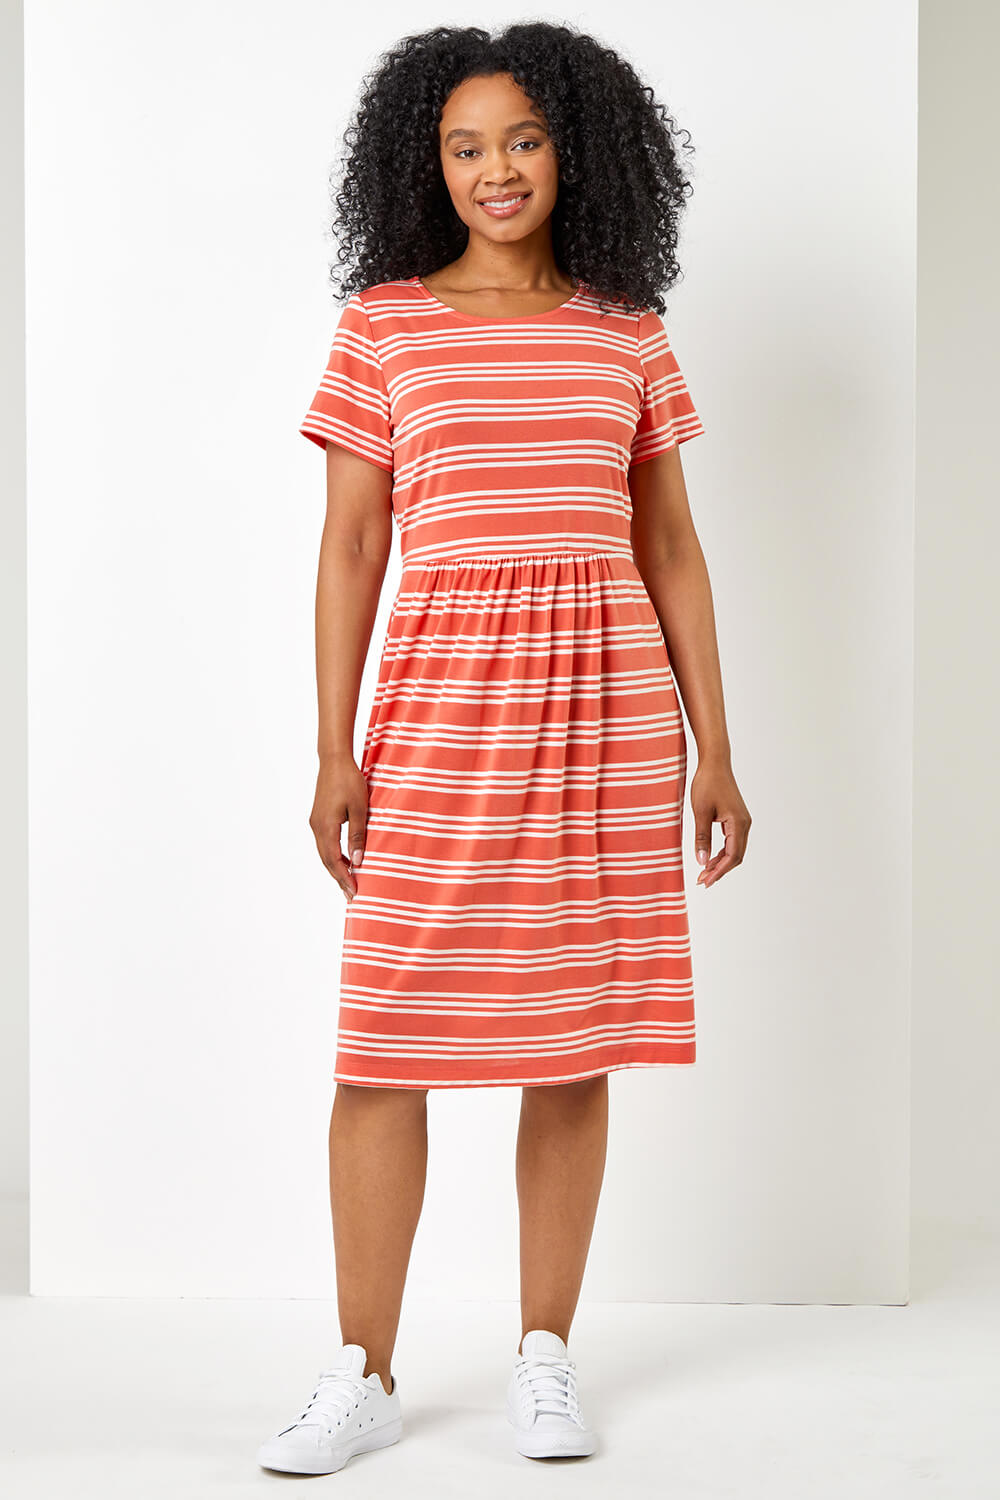 CORAL Petite Stripe Print Skater Dress, Image 3 of 5